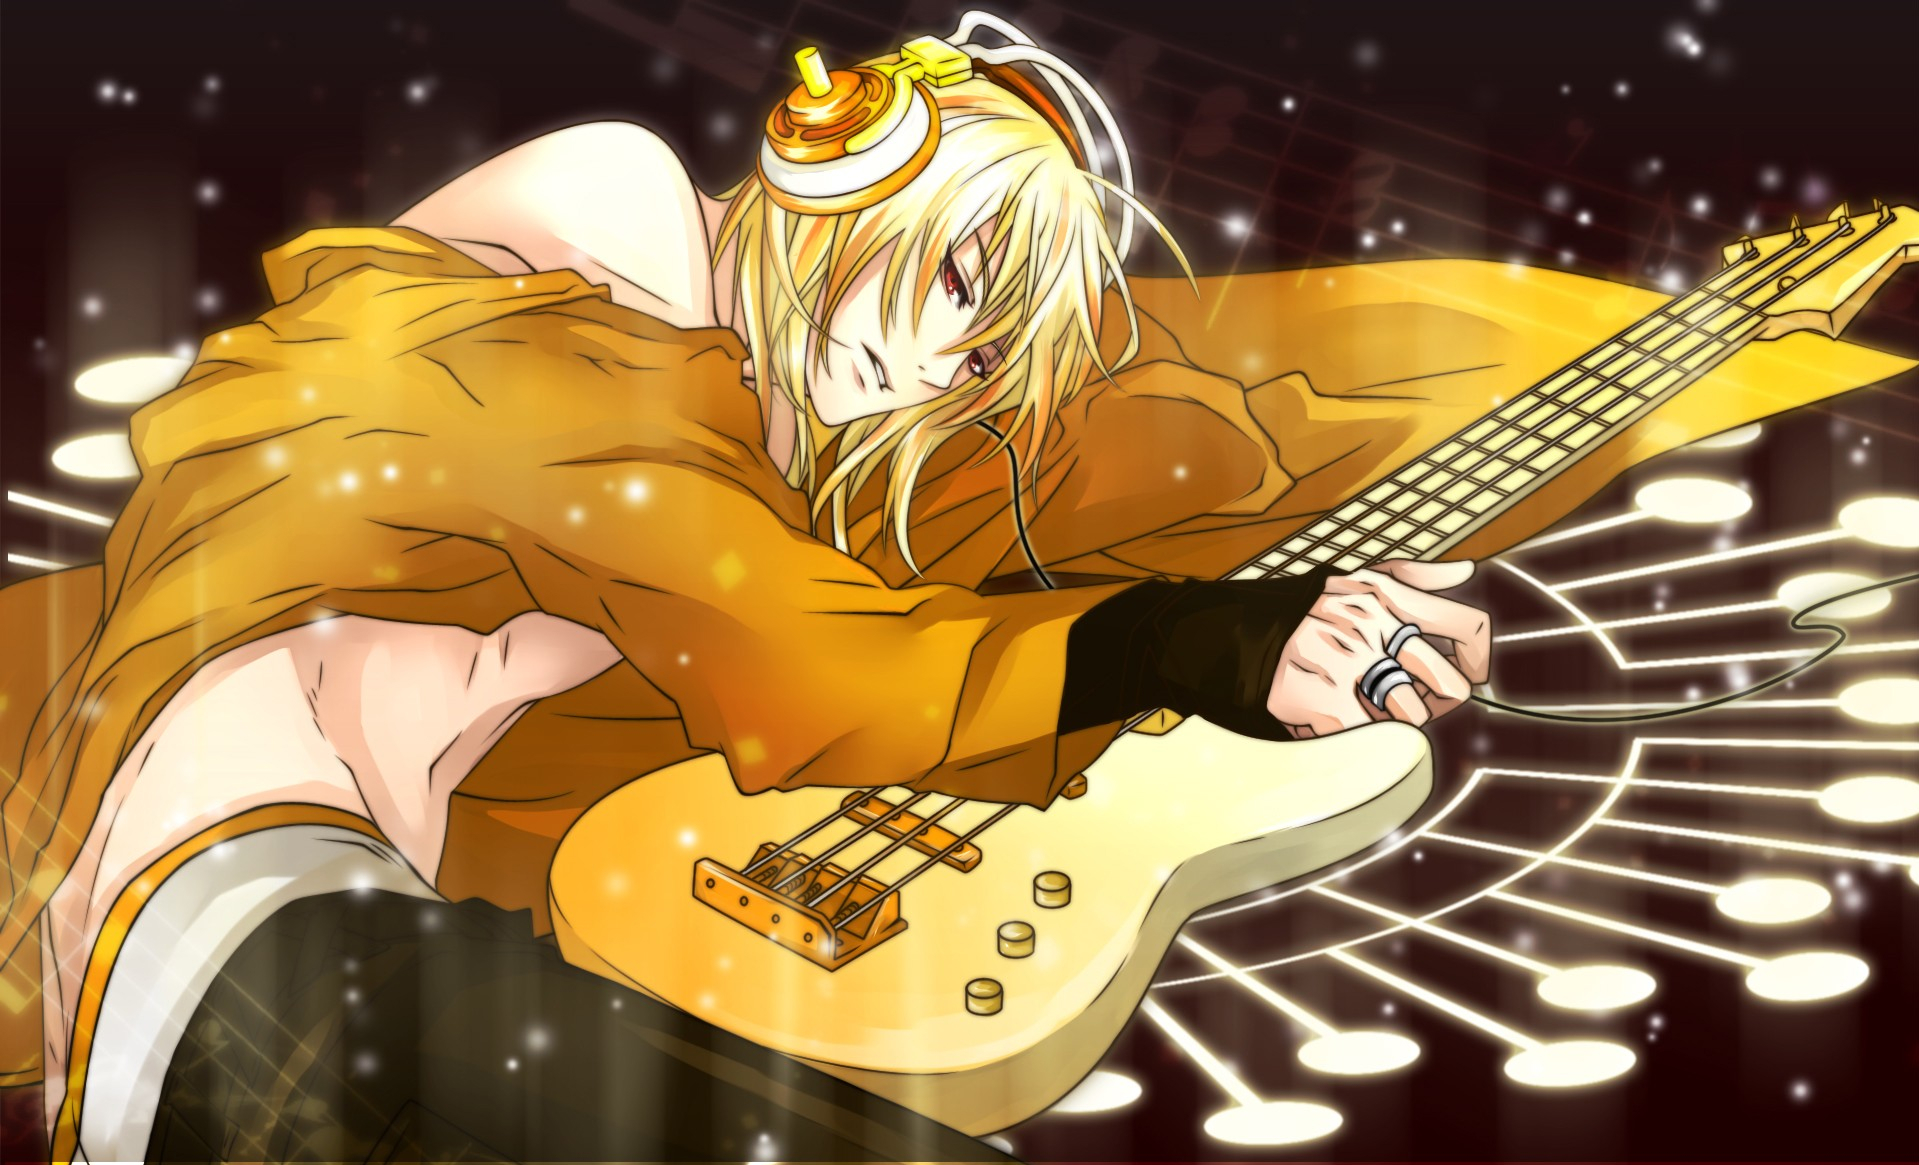 Anime boy guitar music - Cartoon Art - Posters and Art Prints | TeePublic